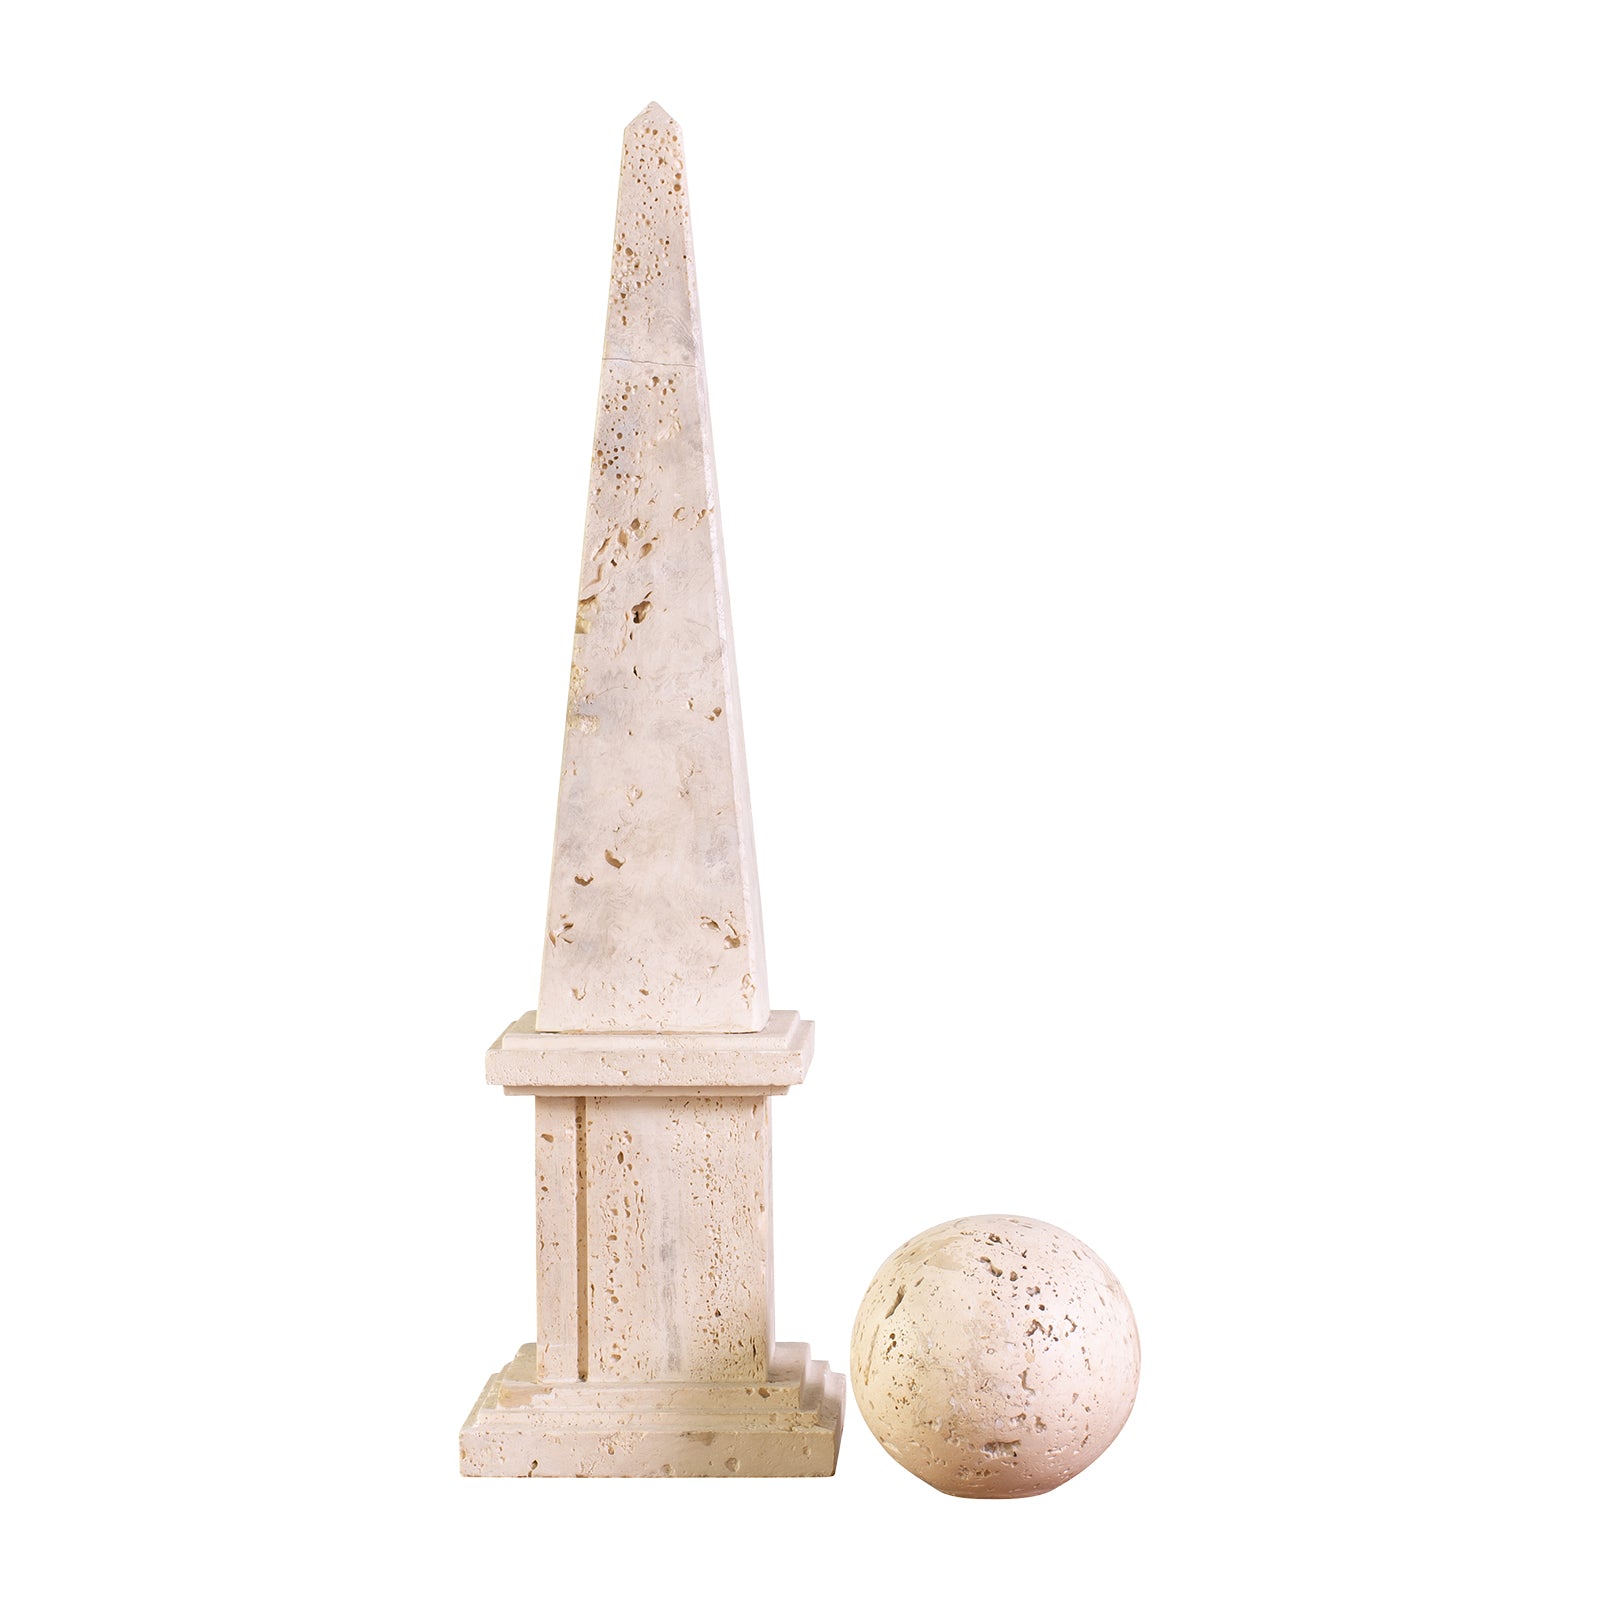 A Travertine Obelisk and Ball